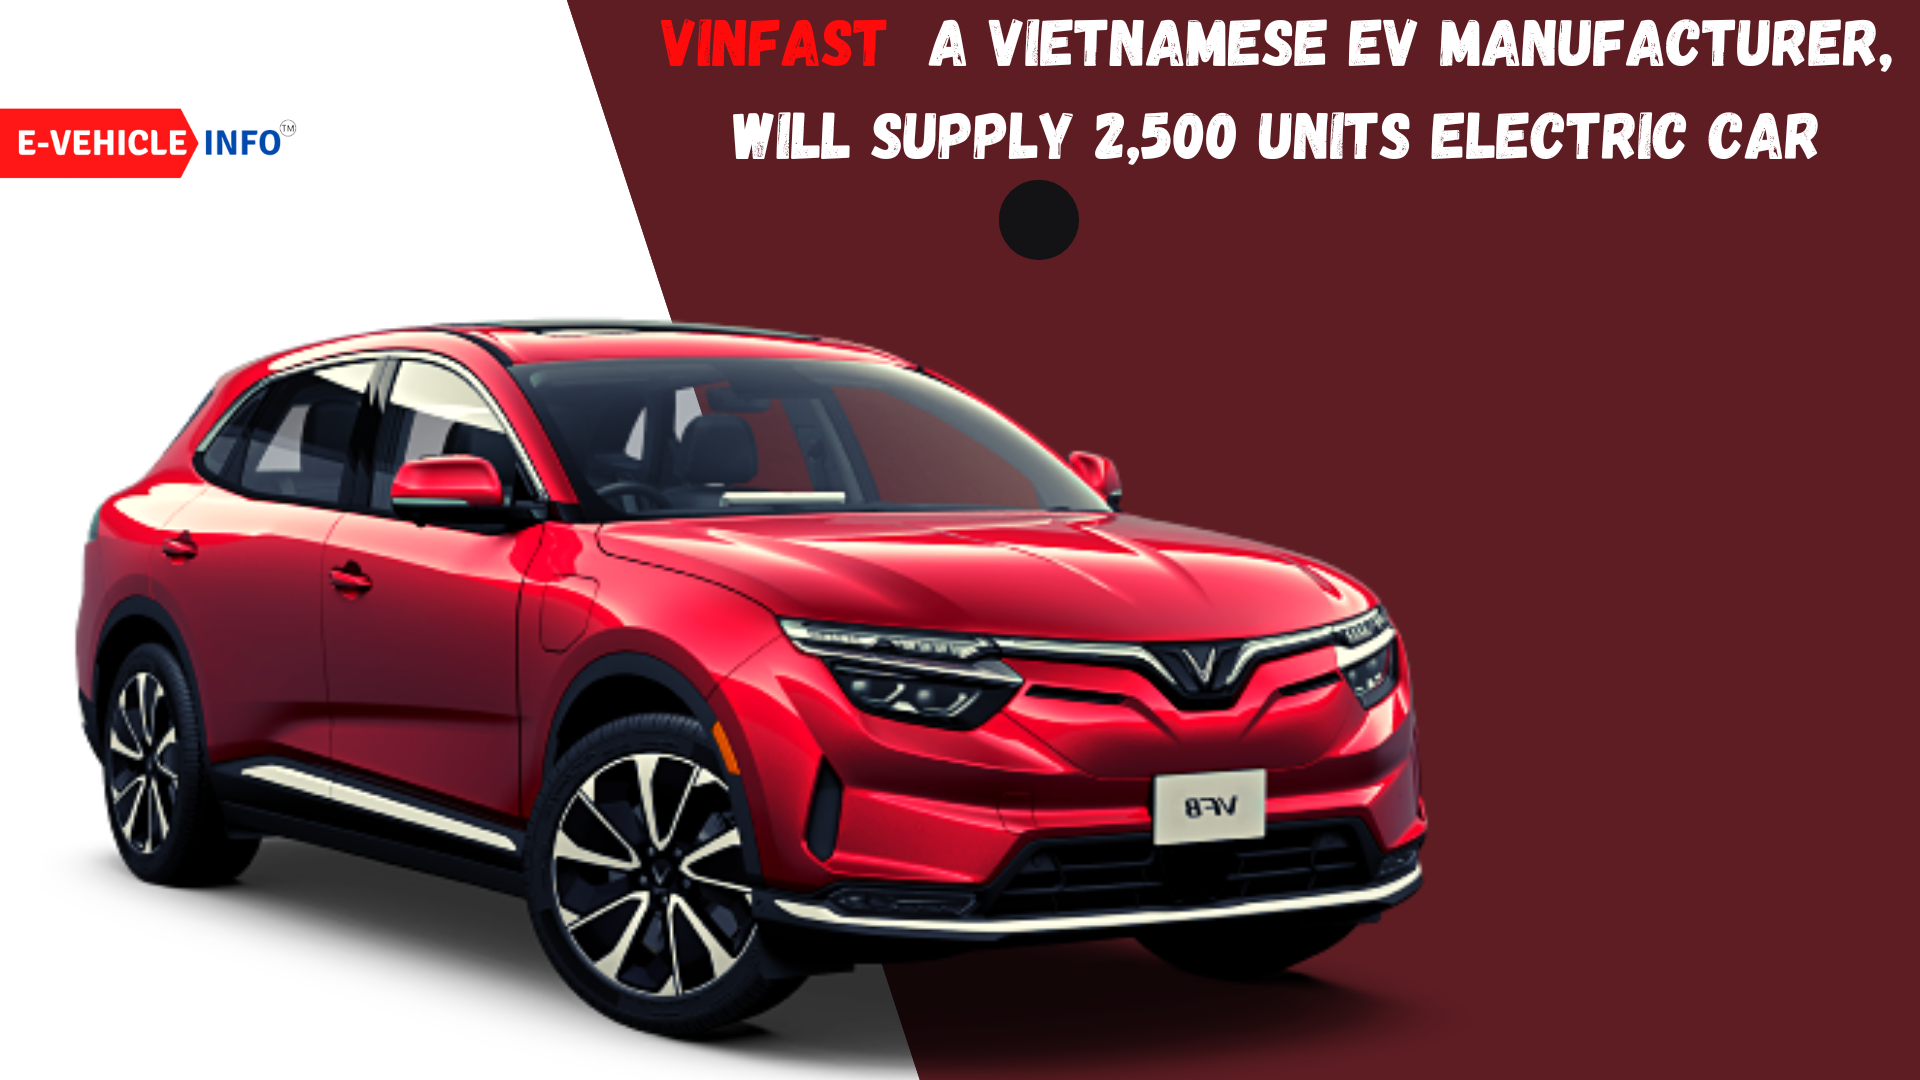 https://e-vehicleinfo.com/global/vietnamese-ev-manufacturer-vinfast-will-supply-2500-units-electric-car/